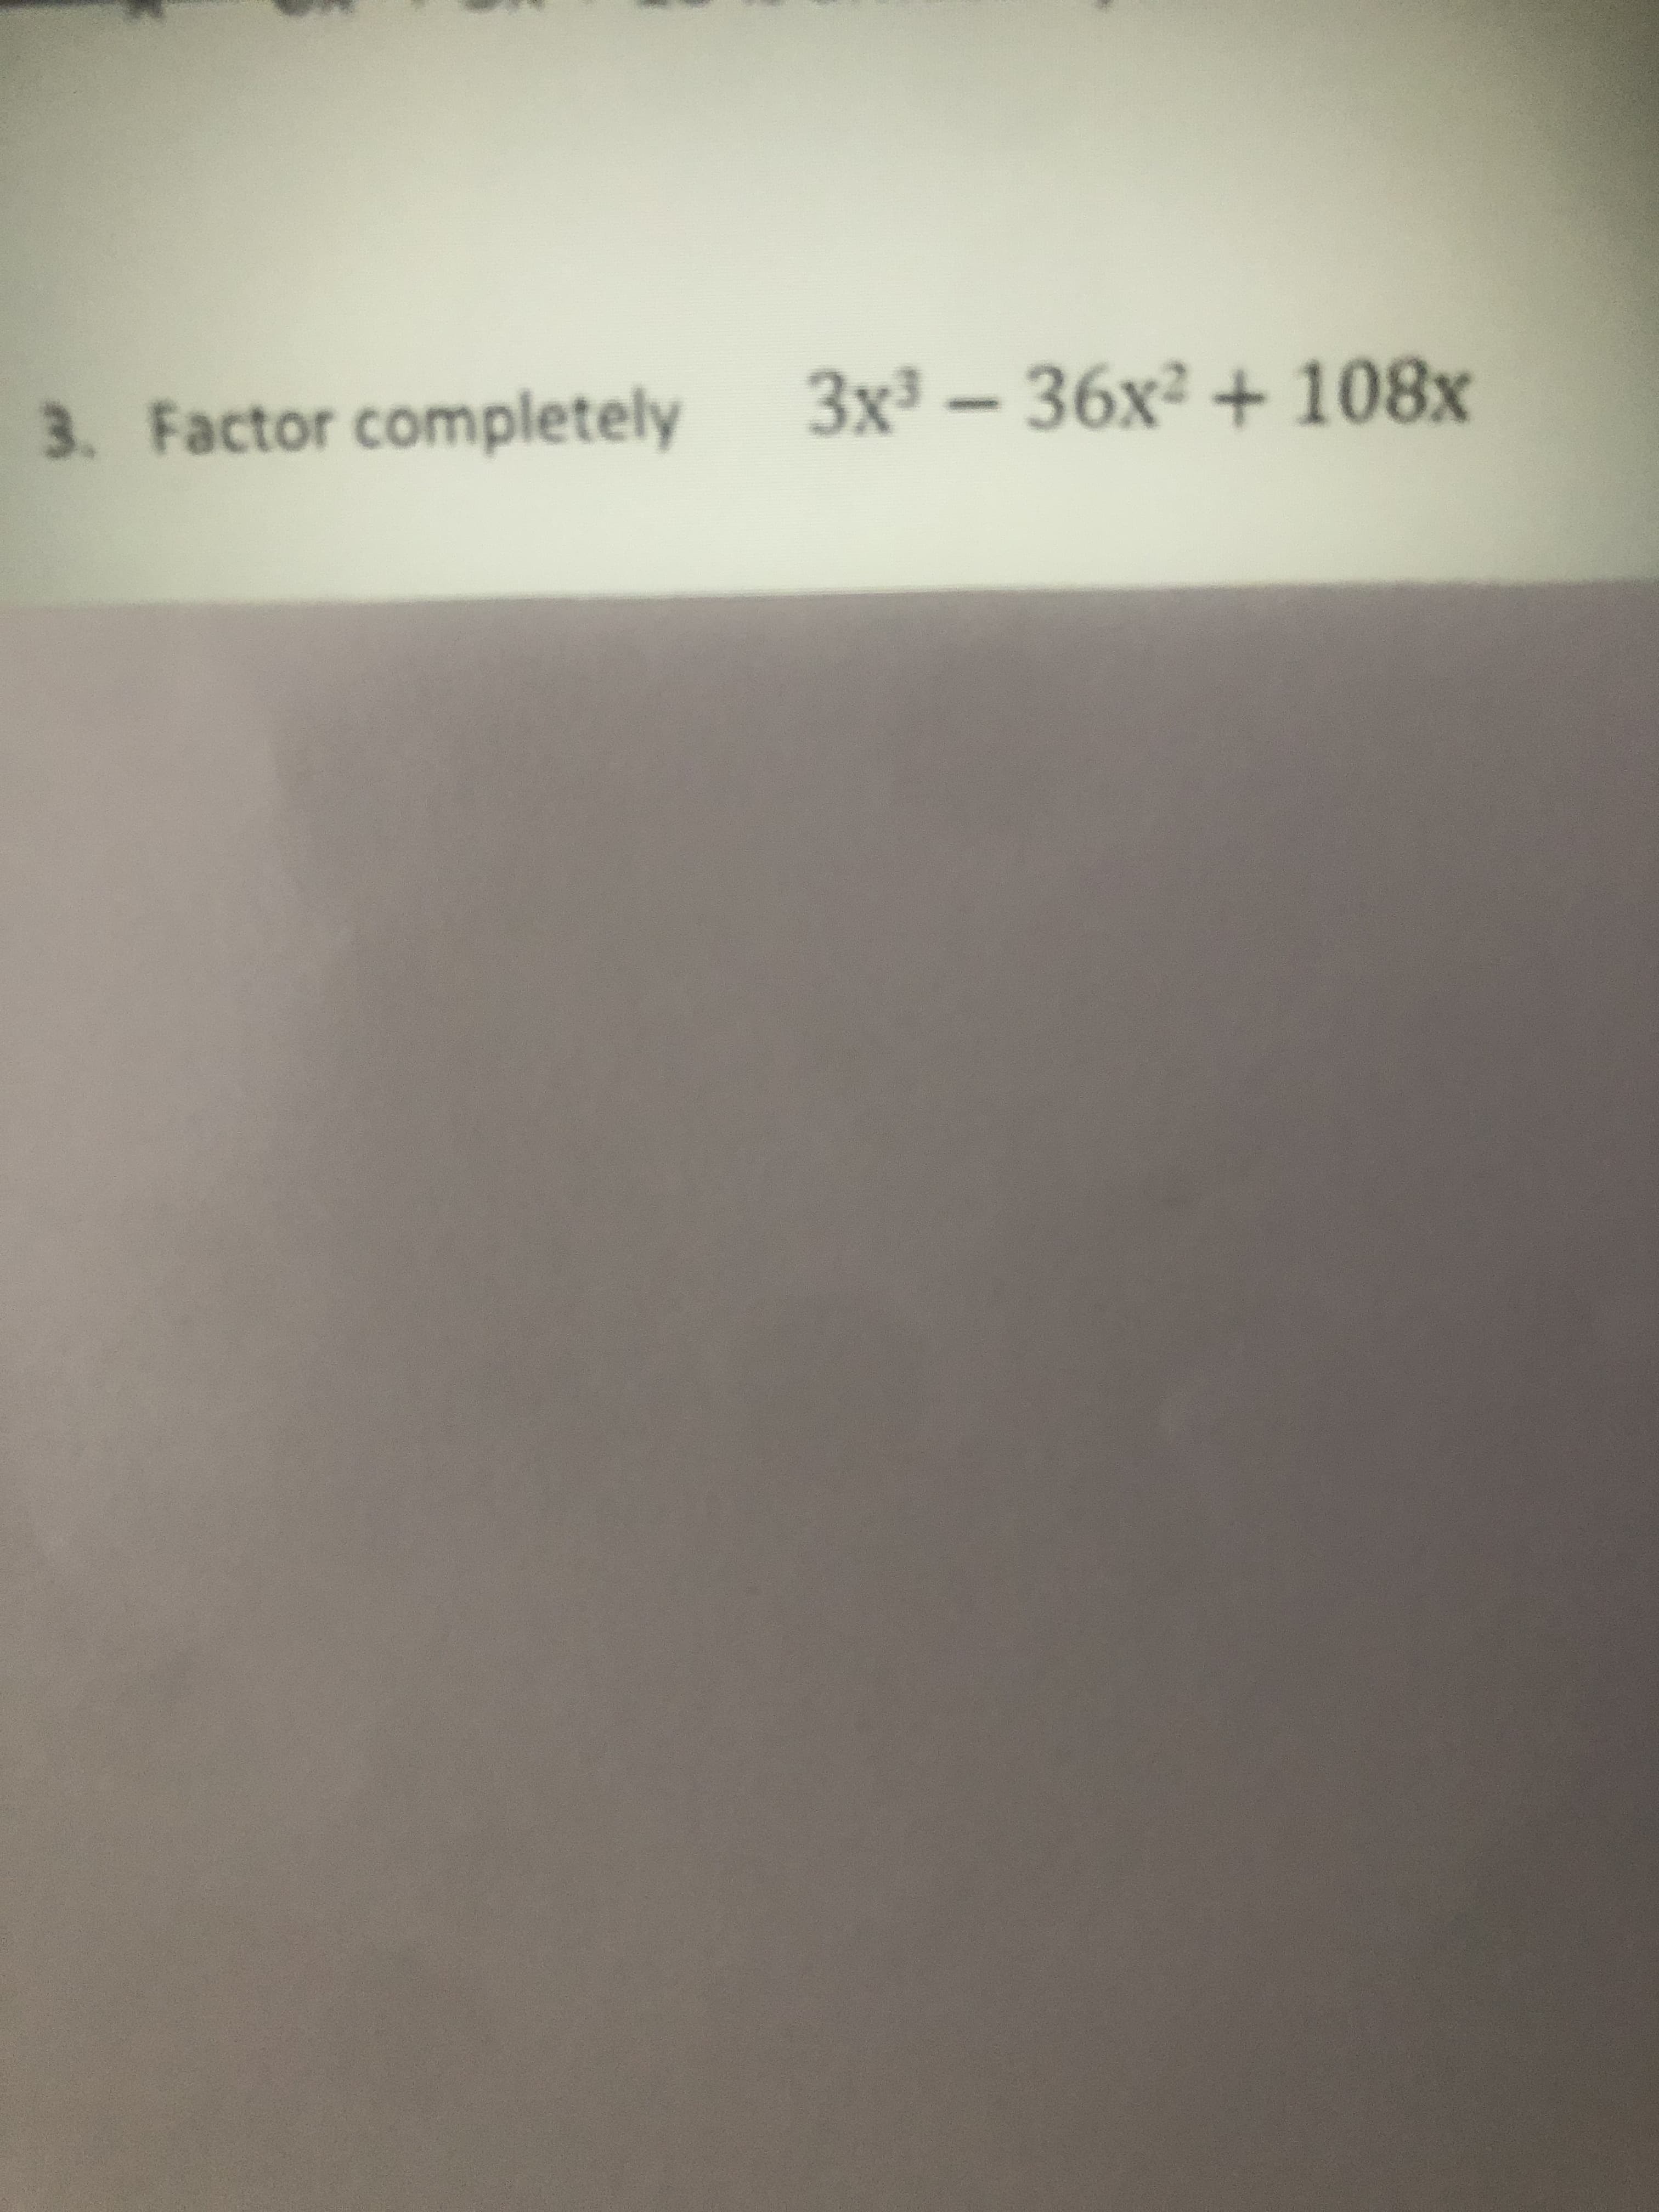 3. Factor completely
3x³ – 36x² + 108x
